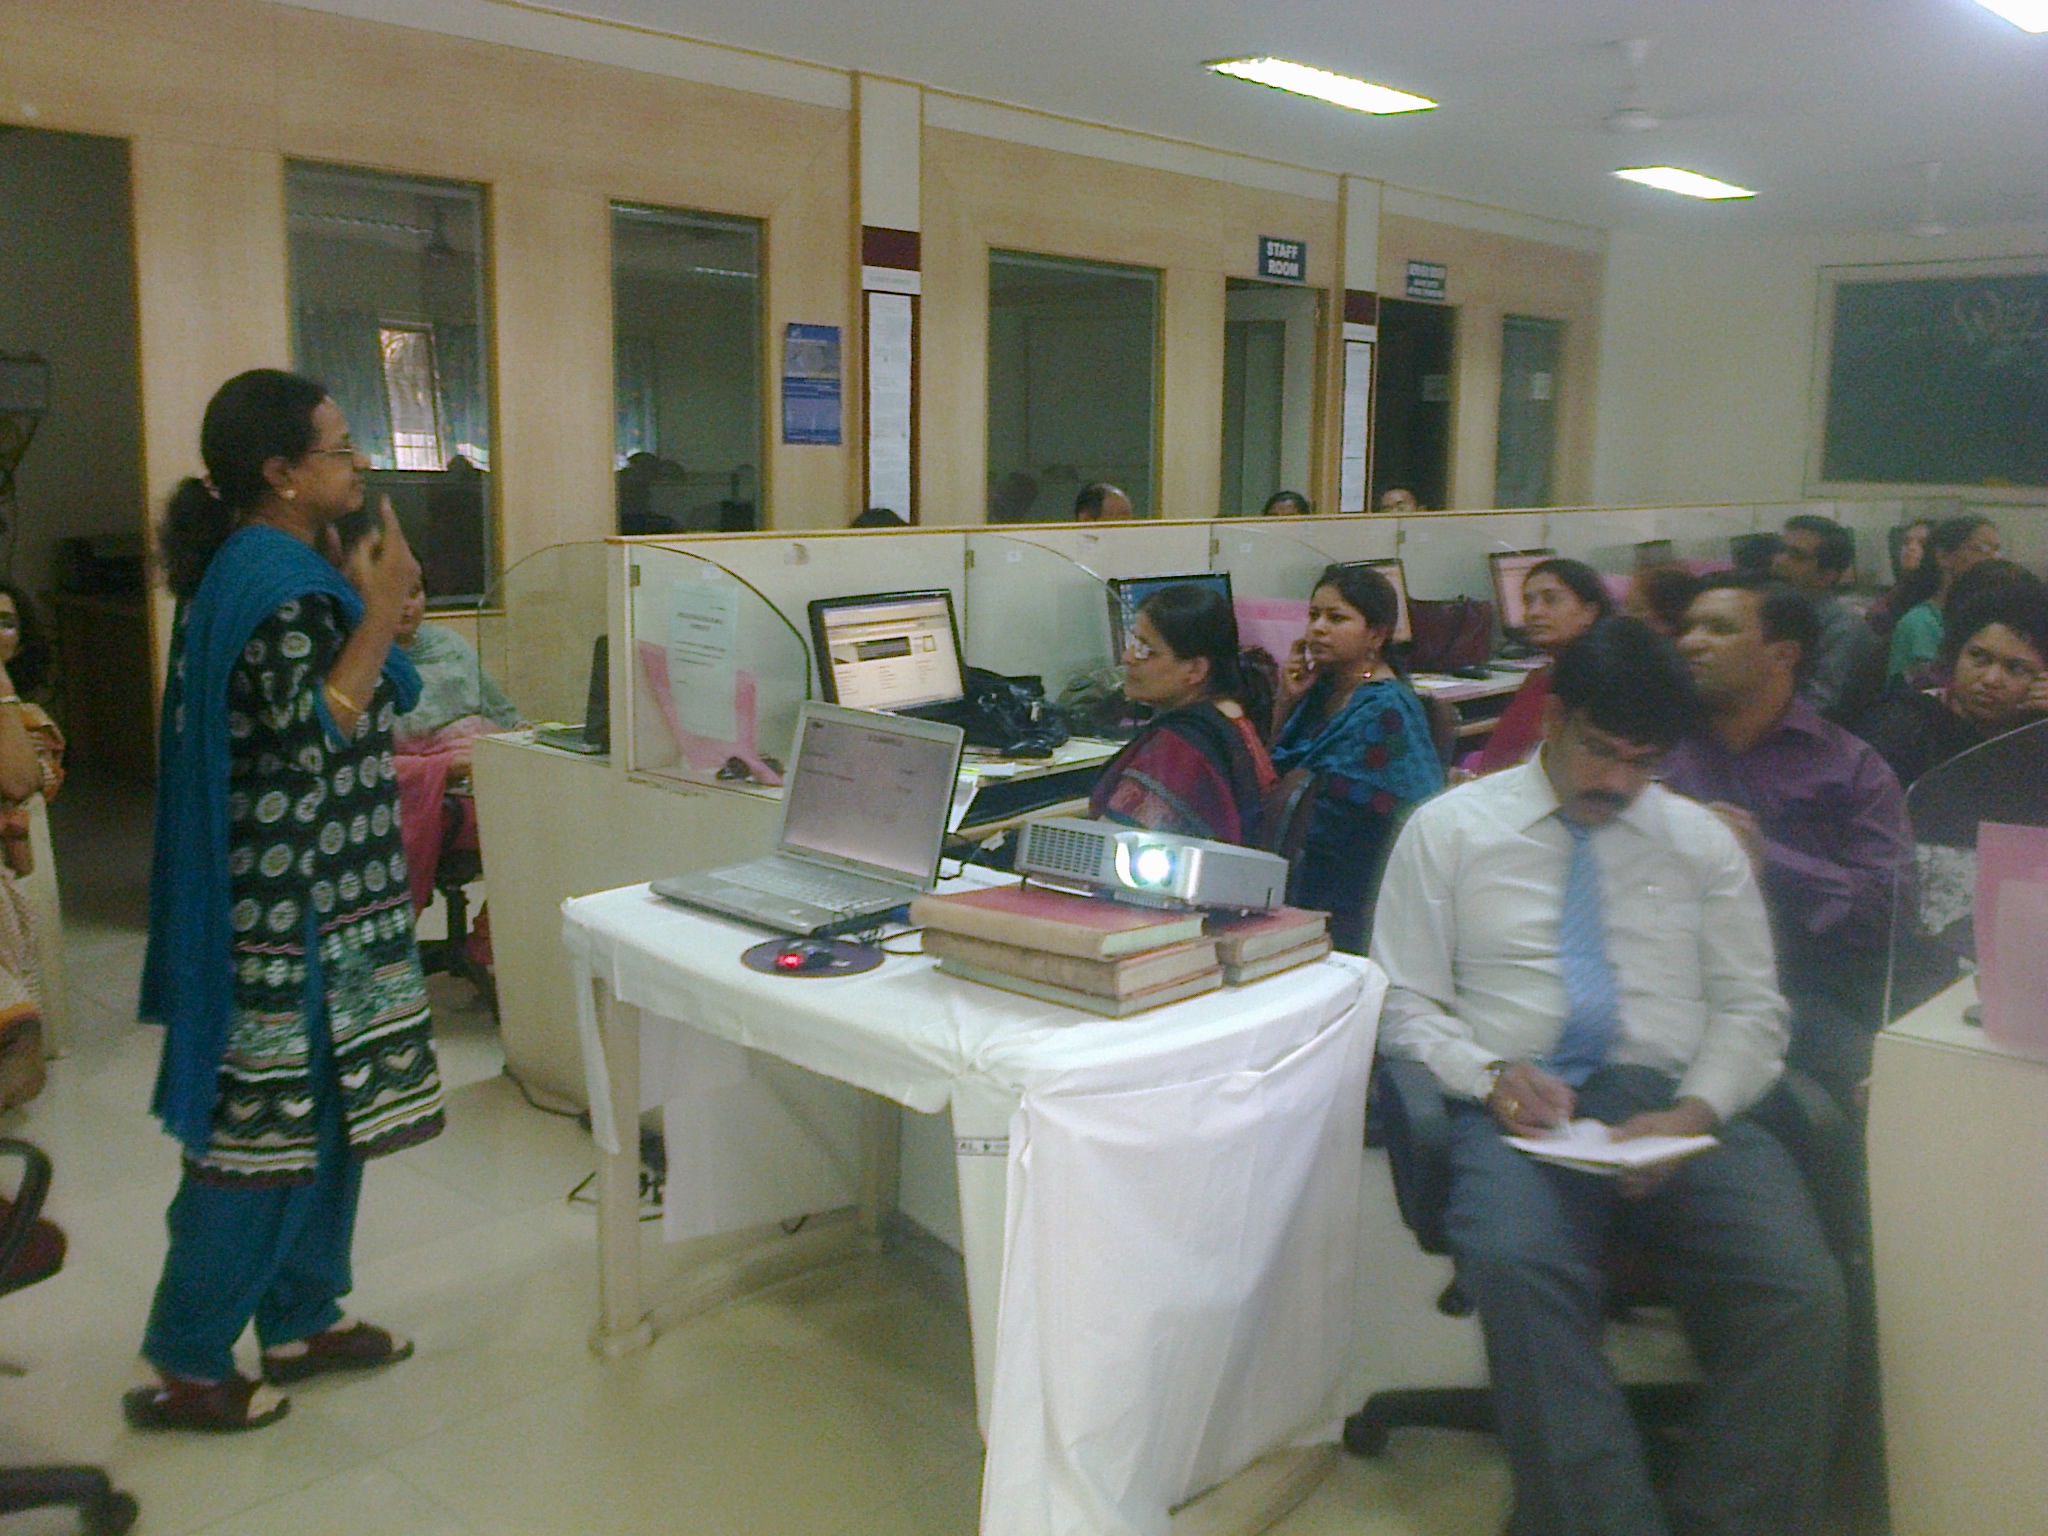 Bharati Vidyapeeth University Medical College (BVDUMC)-Workshop